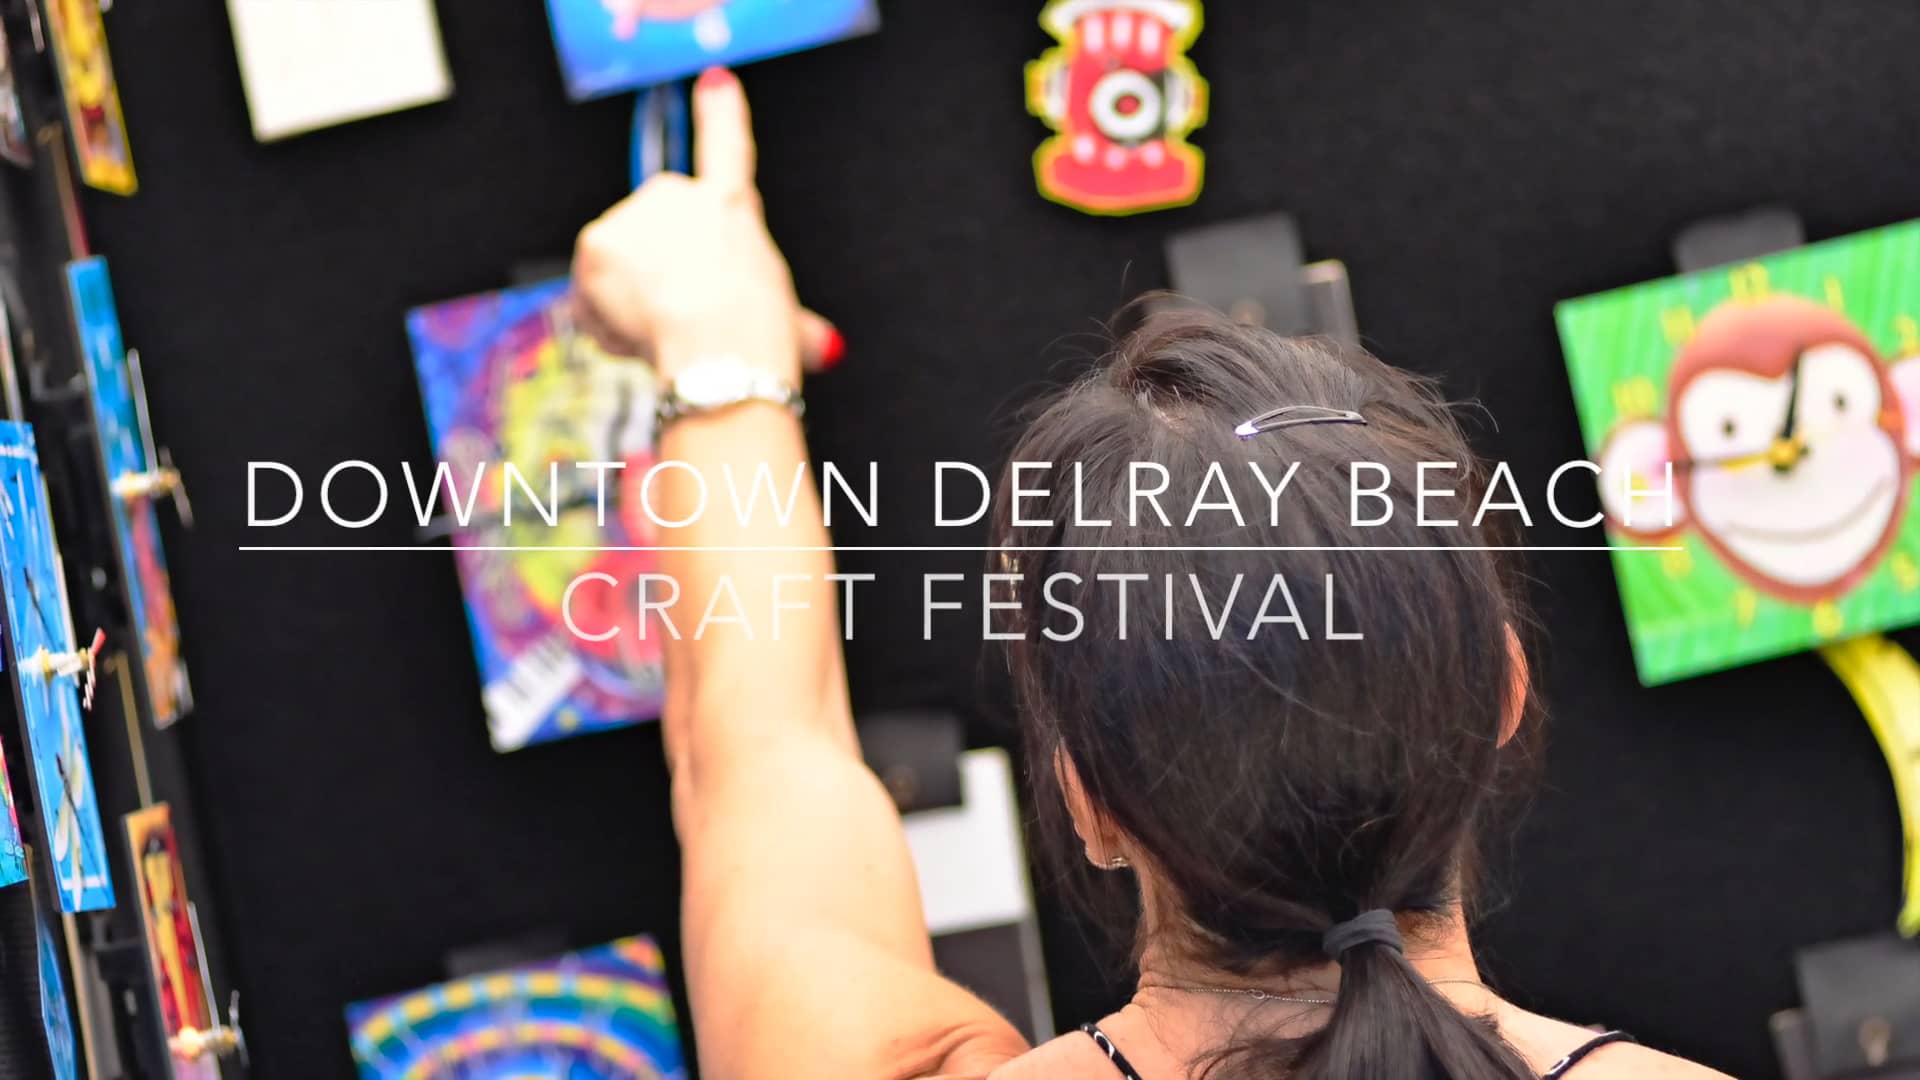 Delray Beach Craft Festival on Vimeo